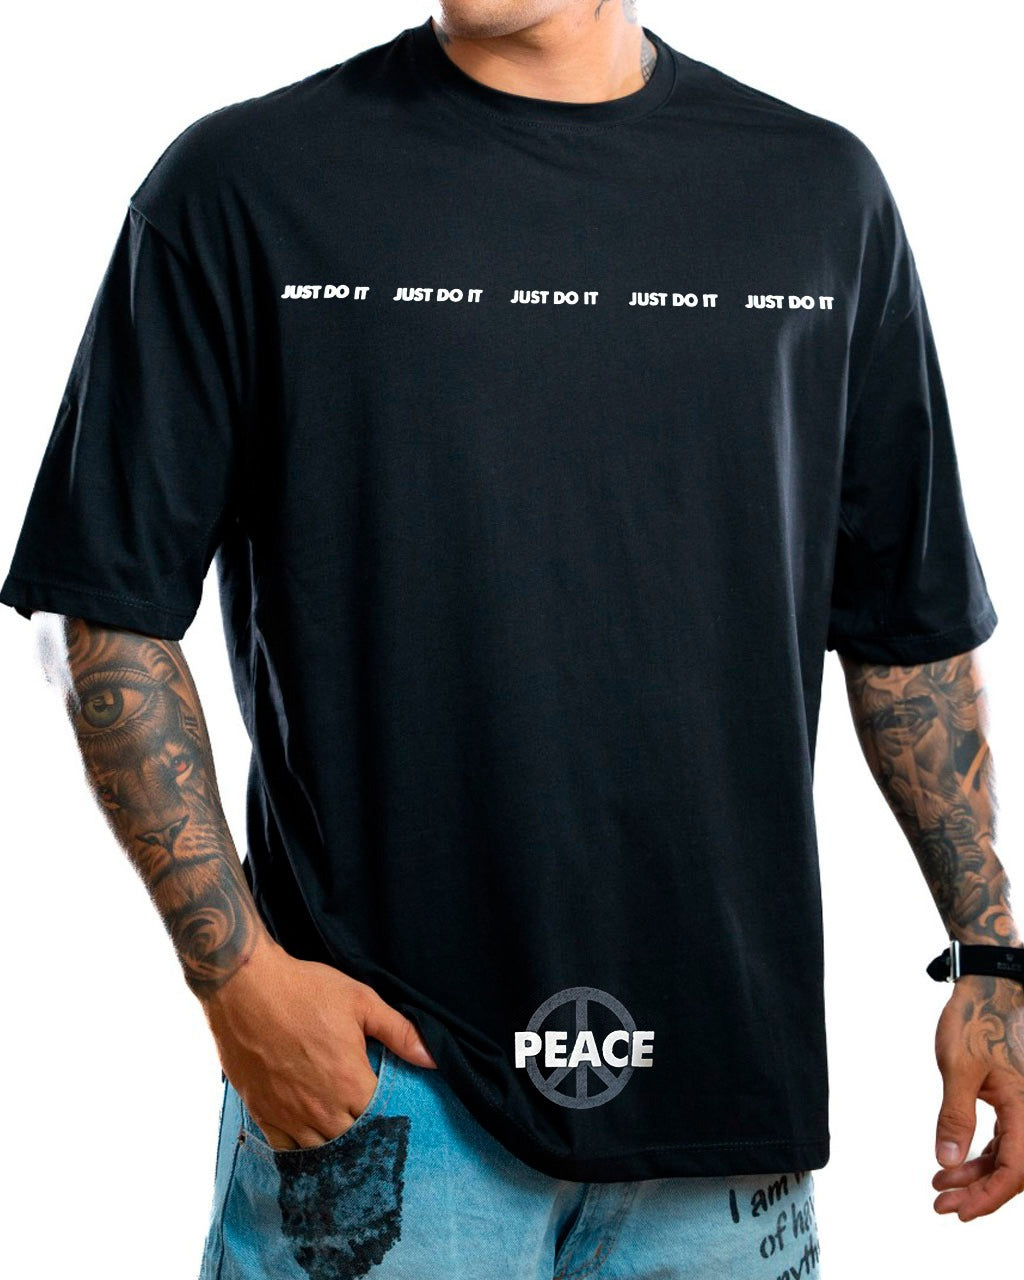 Oversize negra peace do it - Stark Brand